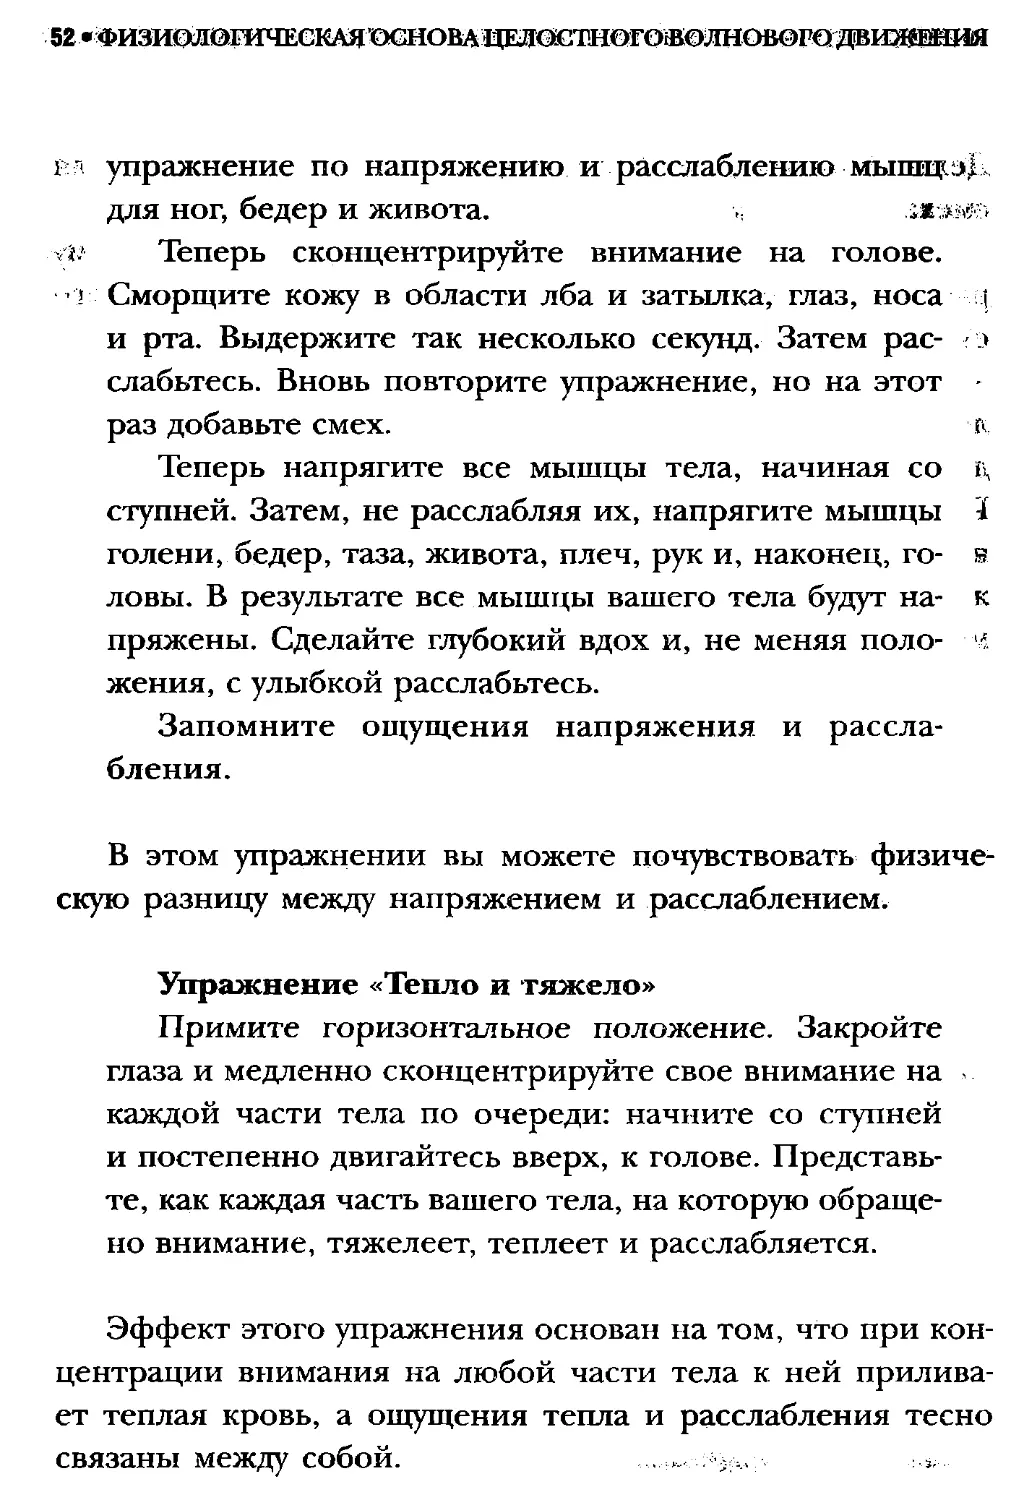 ﻿СлавянеТекст_page0026_1